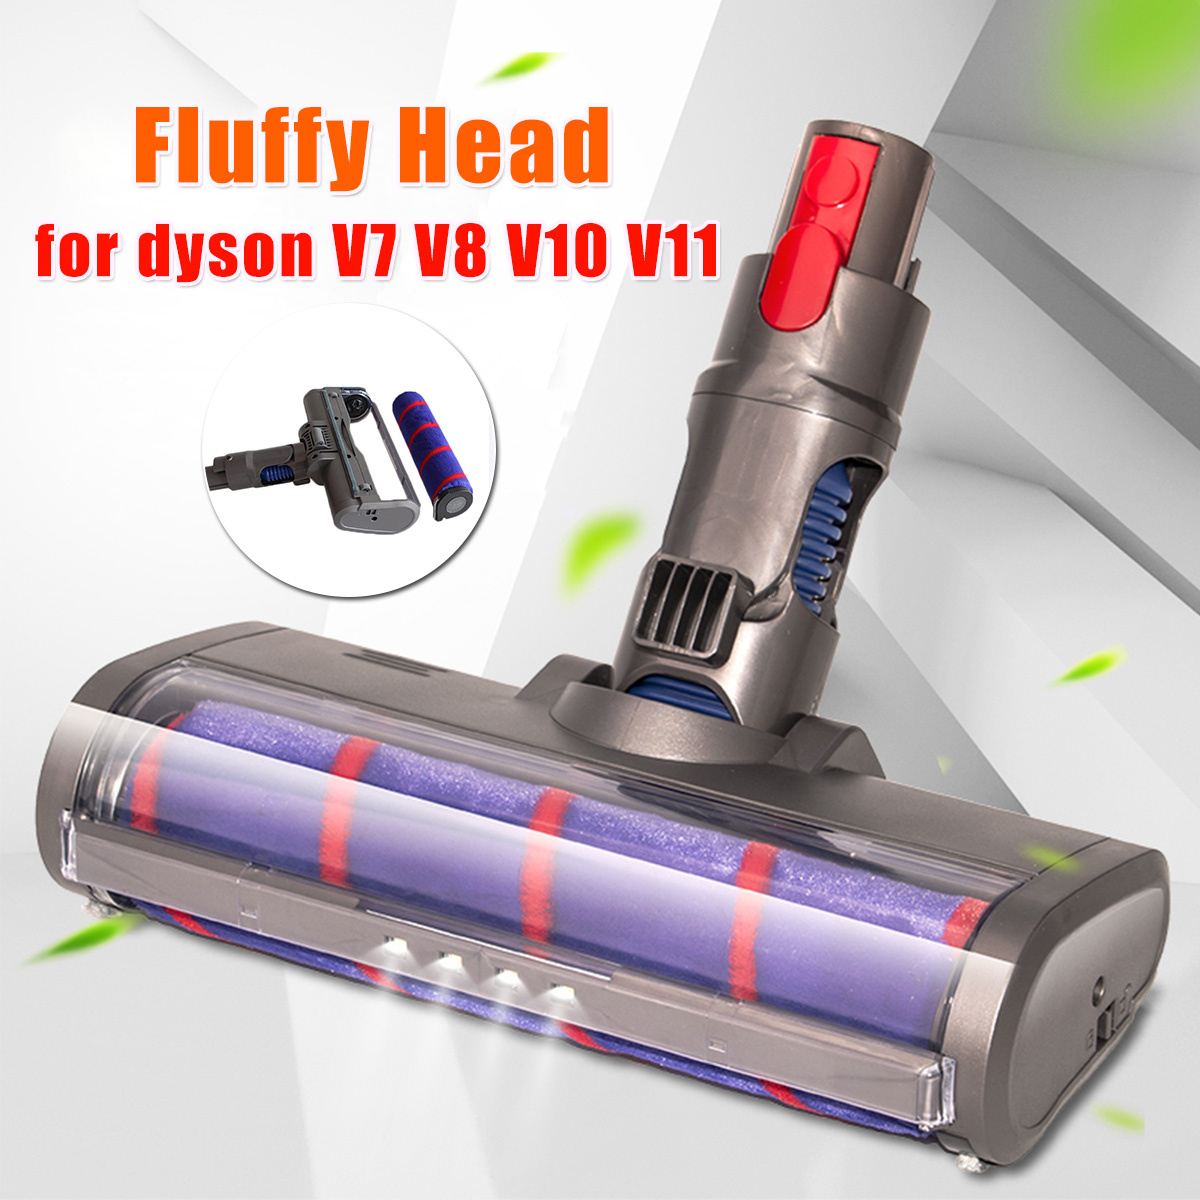 1pcs-Roller-Brush-Replacements-for-DysonV7-V8-V10-V11-Vacuum-Cleaner-Parts-Accessories-1744474-3